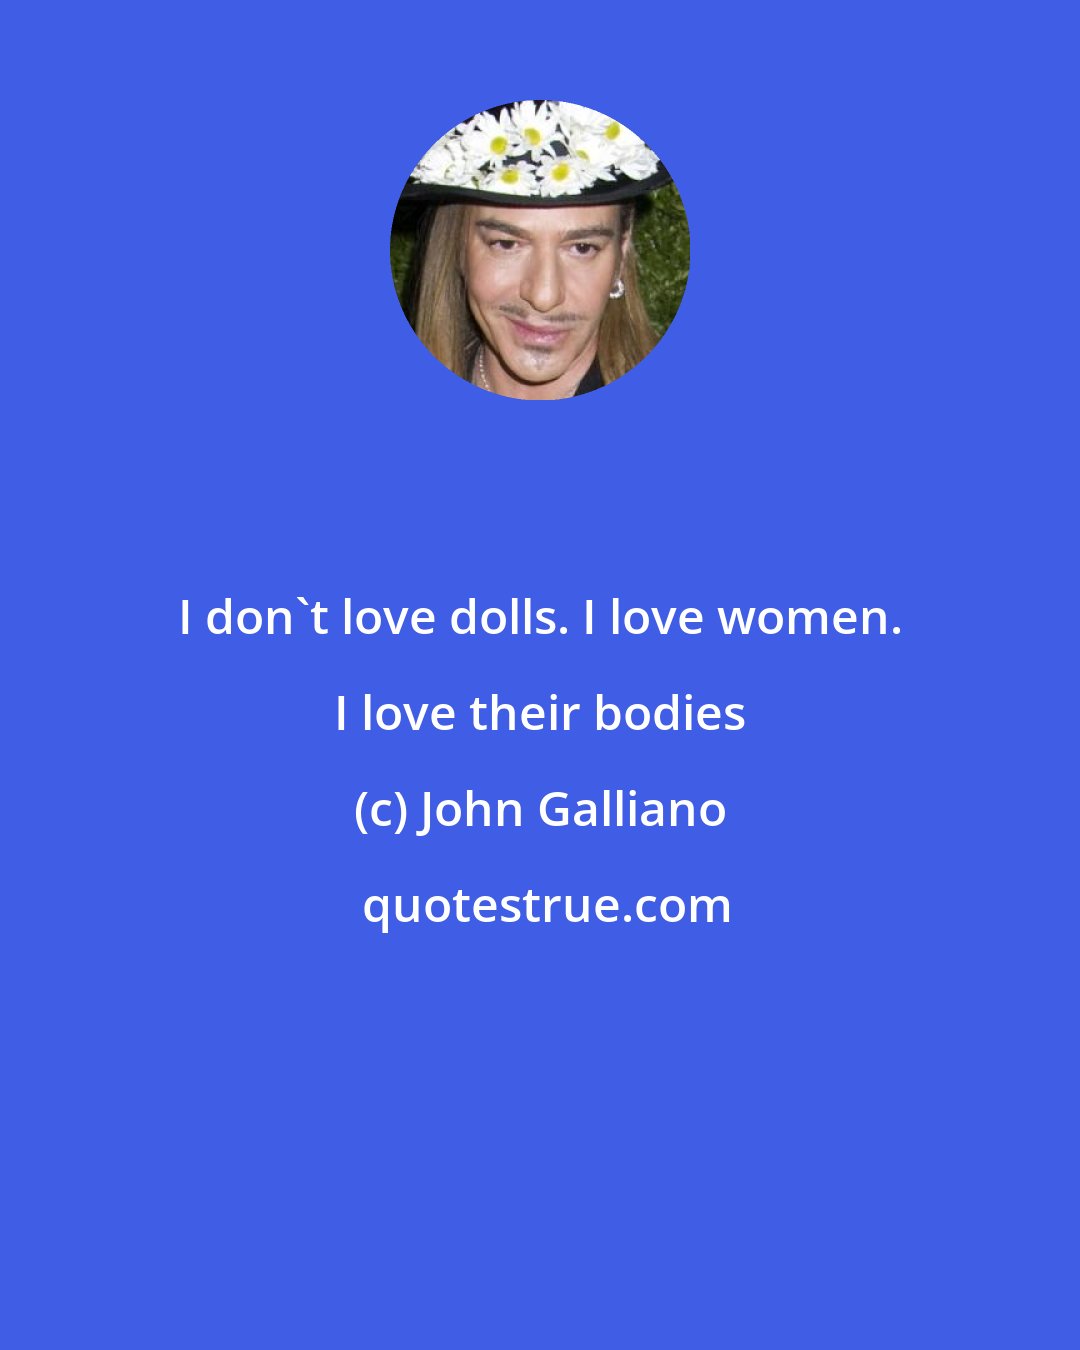 John Galliano: I don't love dolls. I love women. I love their bodies